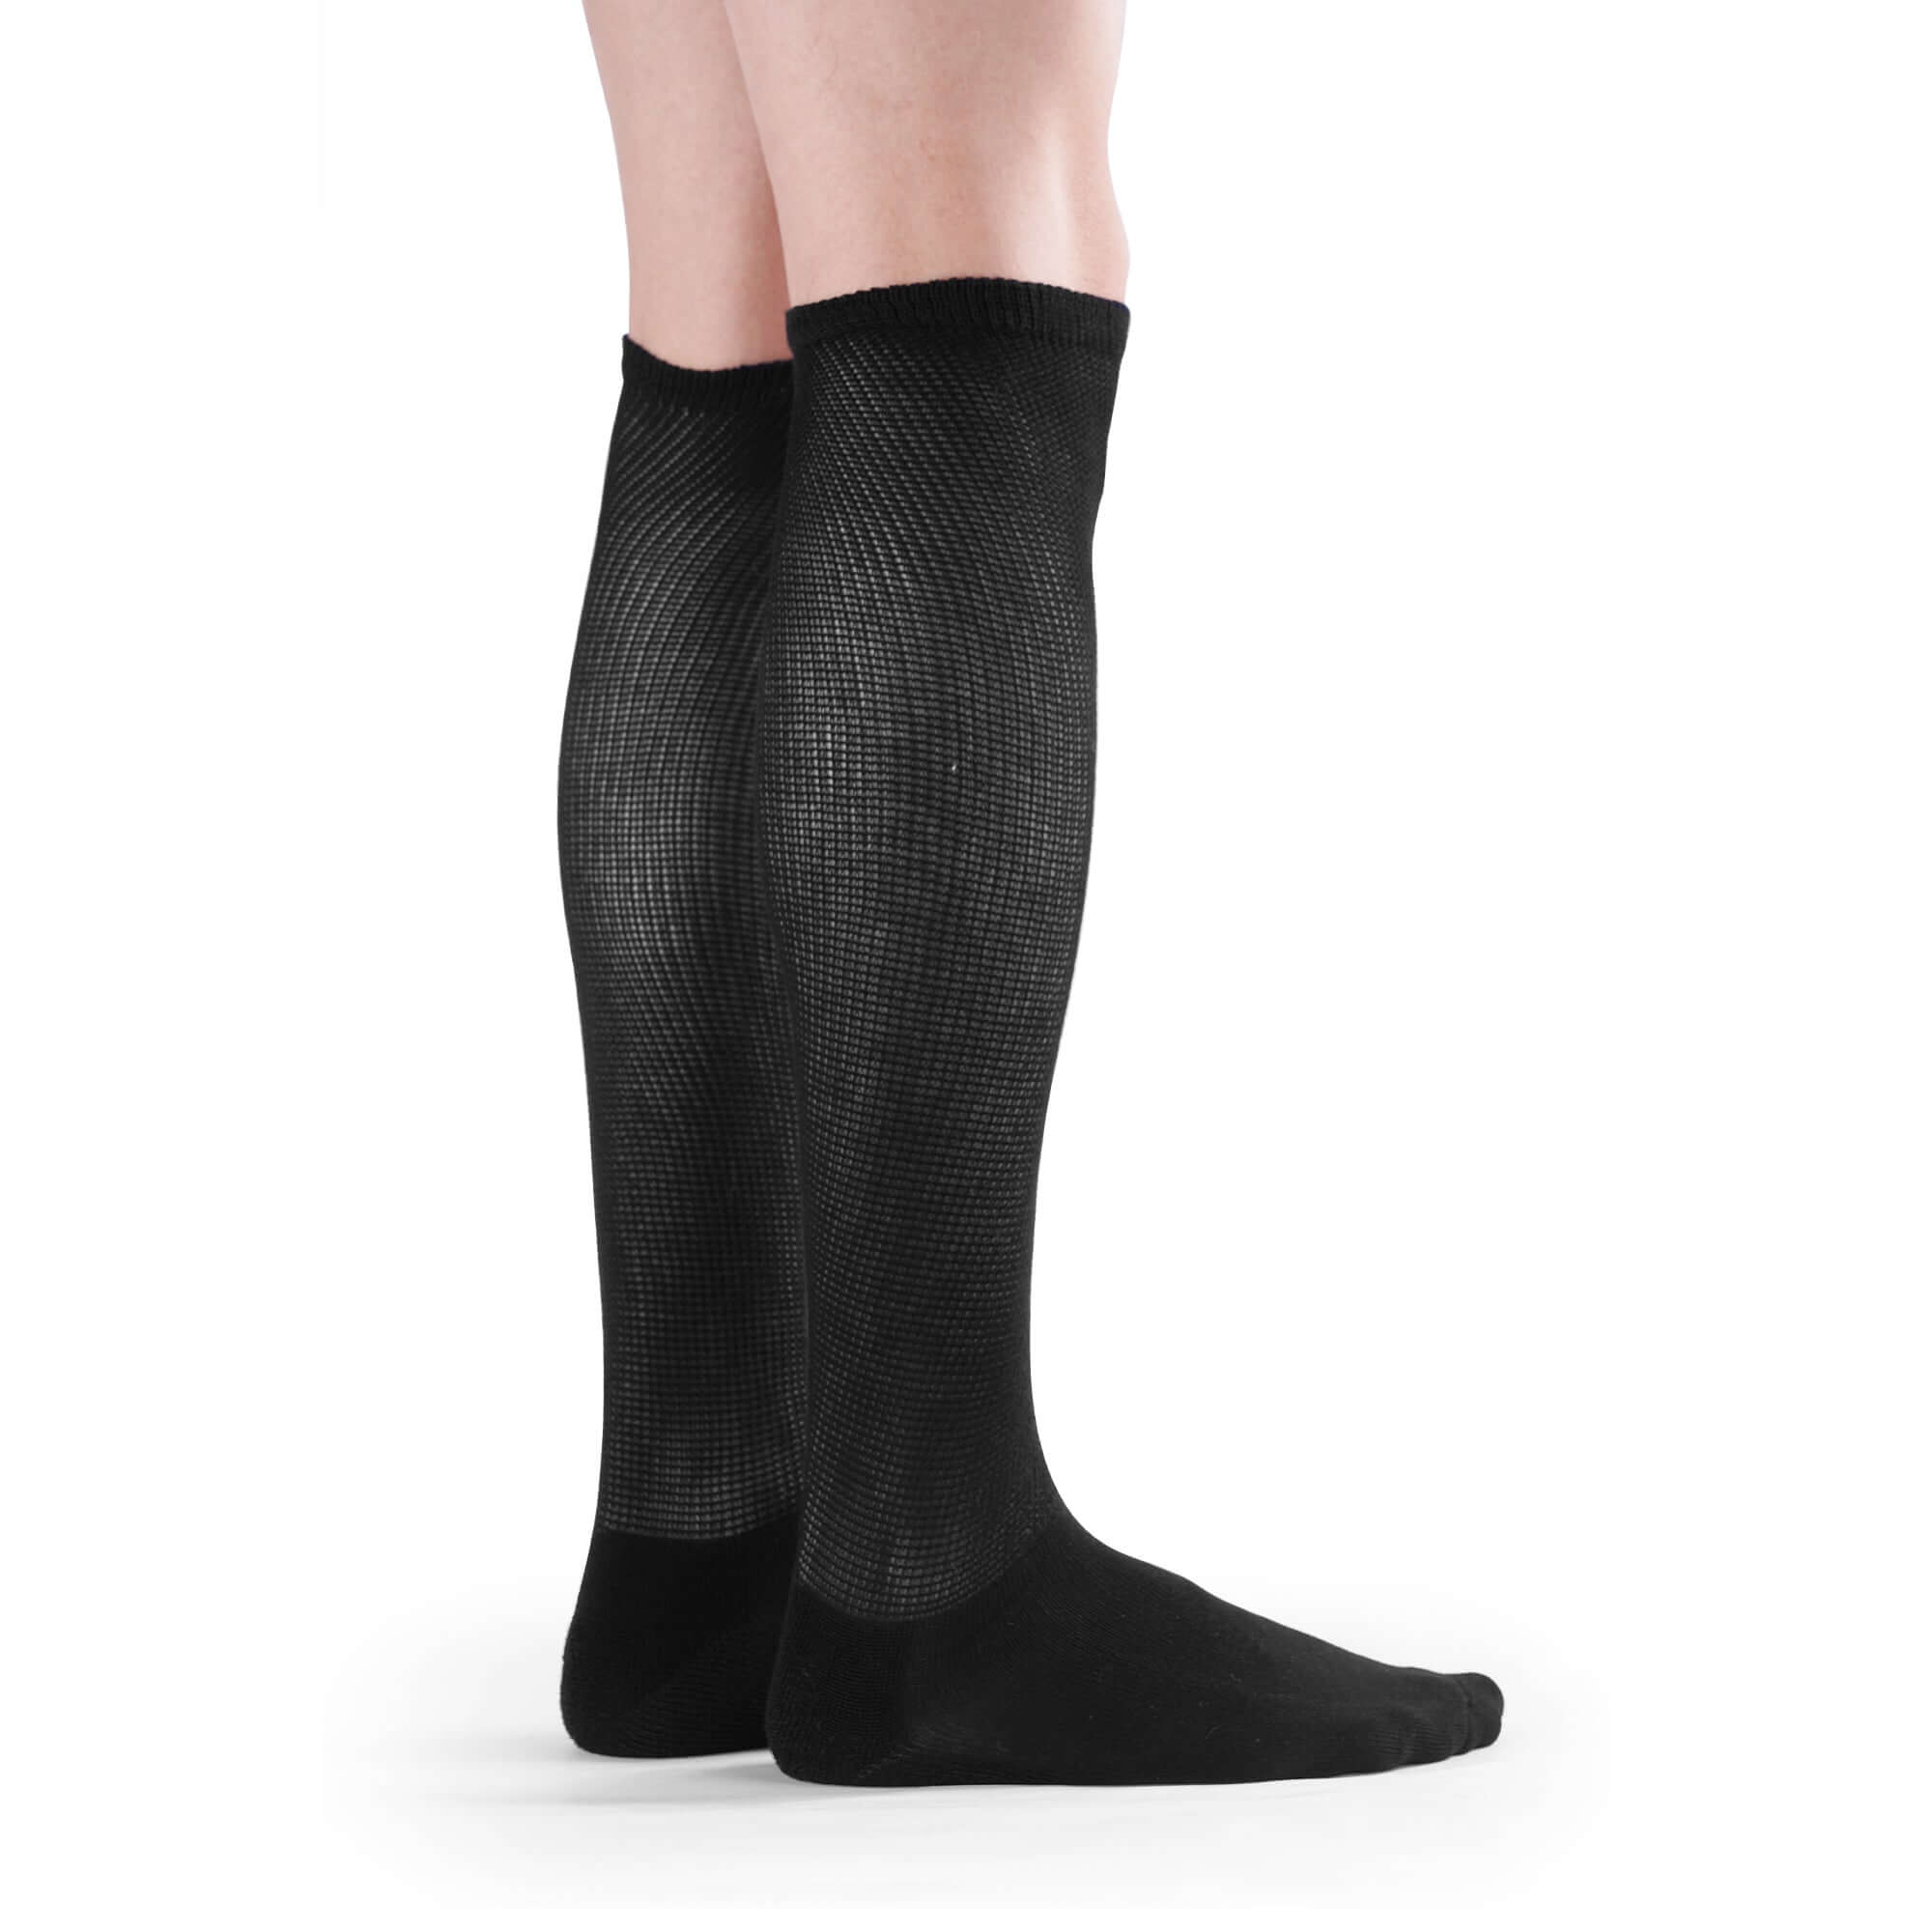 Extra wide non-binding Bamboo Knee high socks, seamless toe, long circulatory design with Warm cushion sole, 4 pairs - md-diab